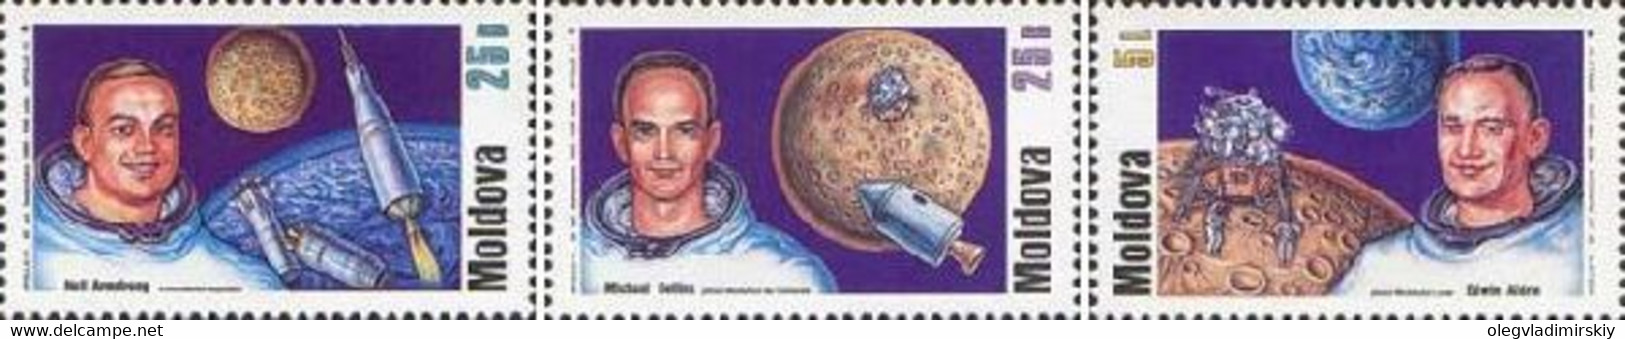 Moldavia Moldova 1999 30th Of The Moon Landing Set Of 3 Stamps - Verenigde Staten